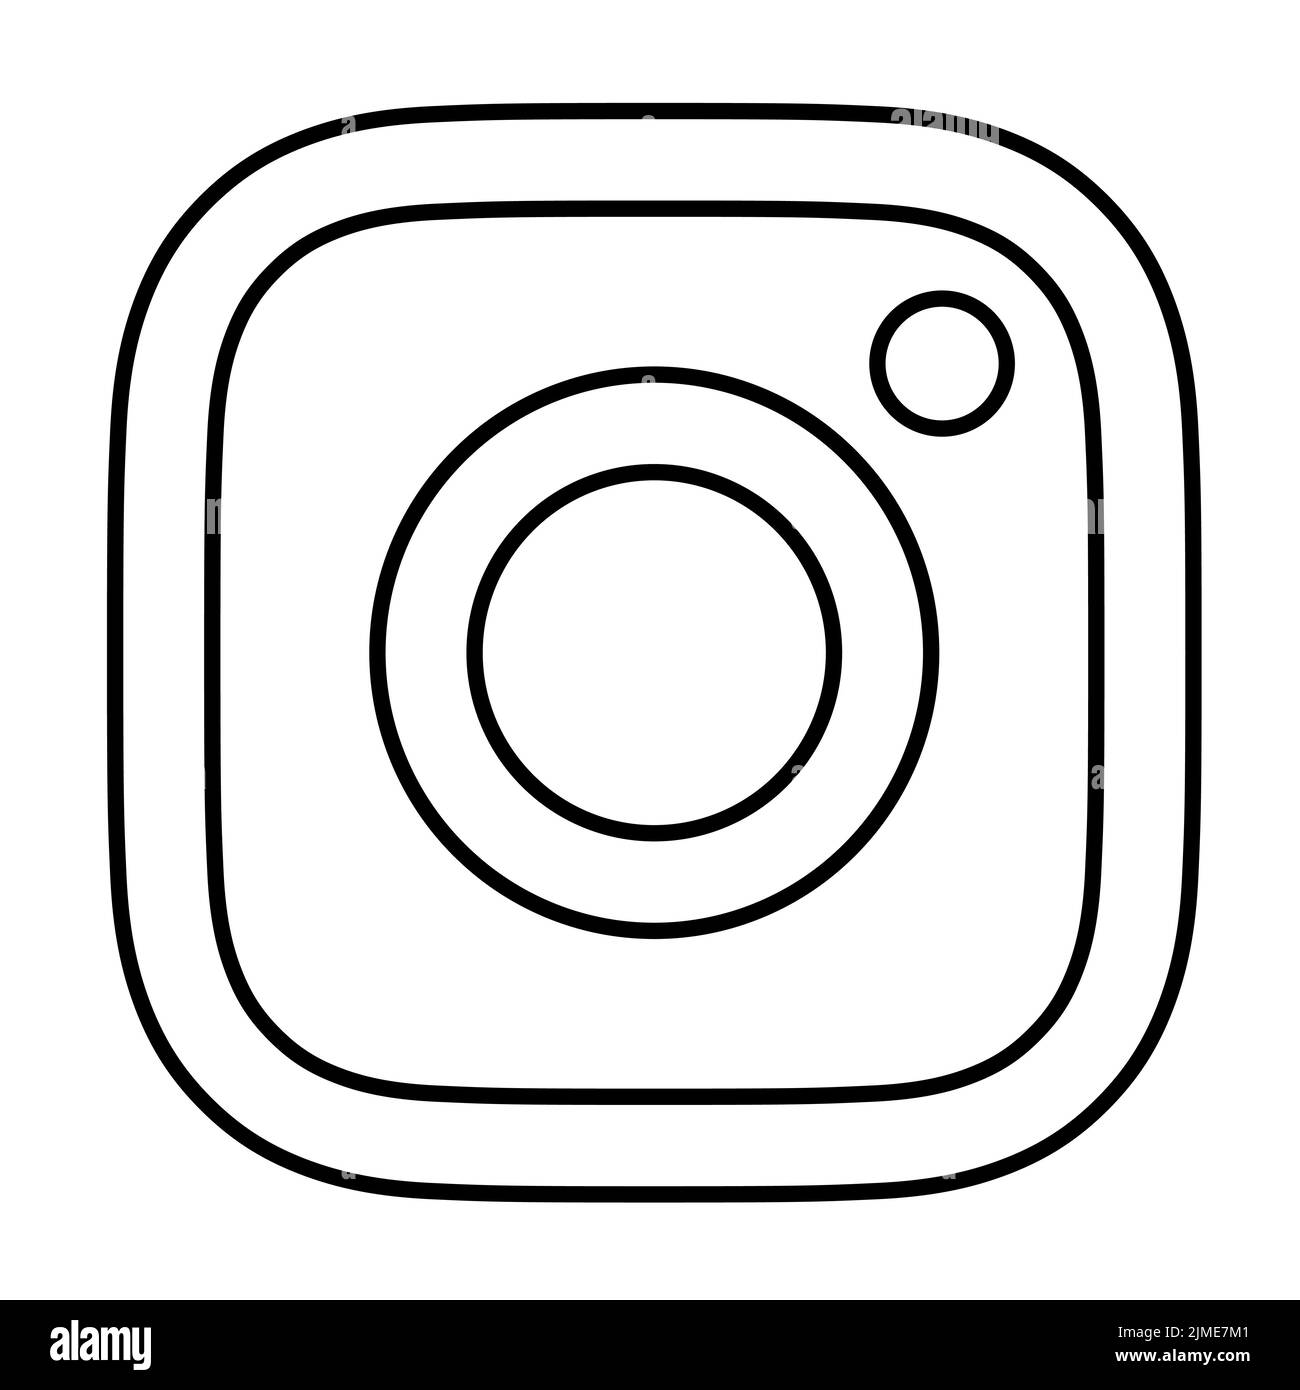 Instagram social media app icon Stock Vector